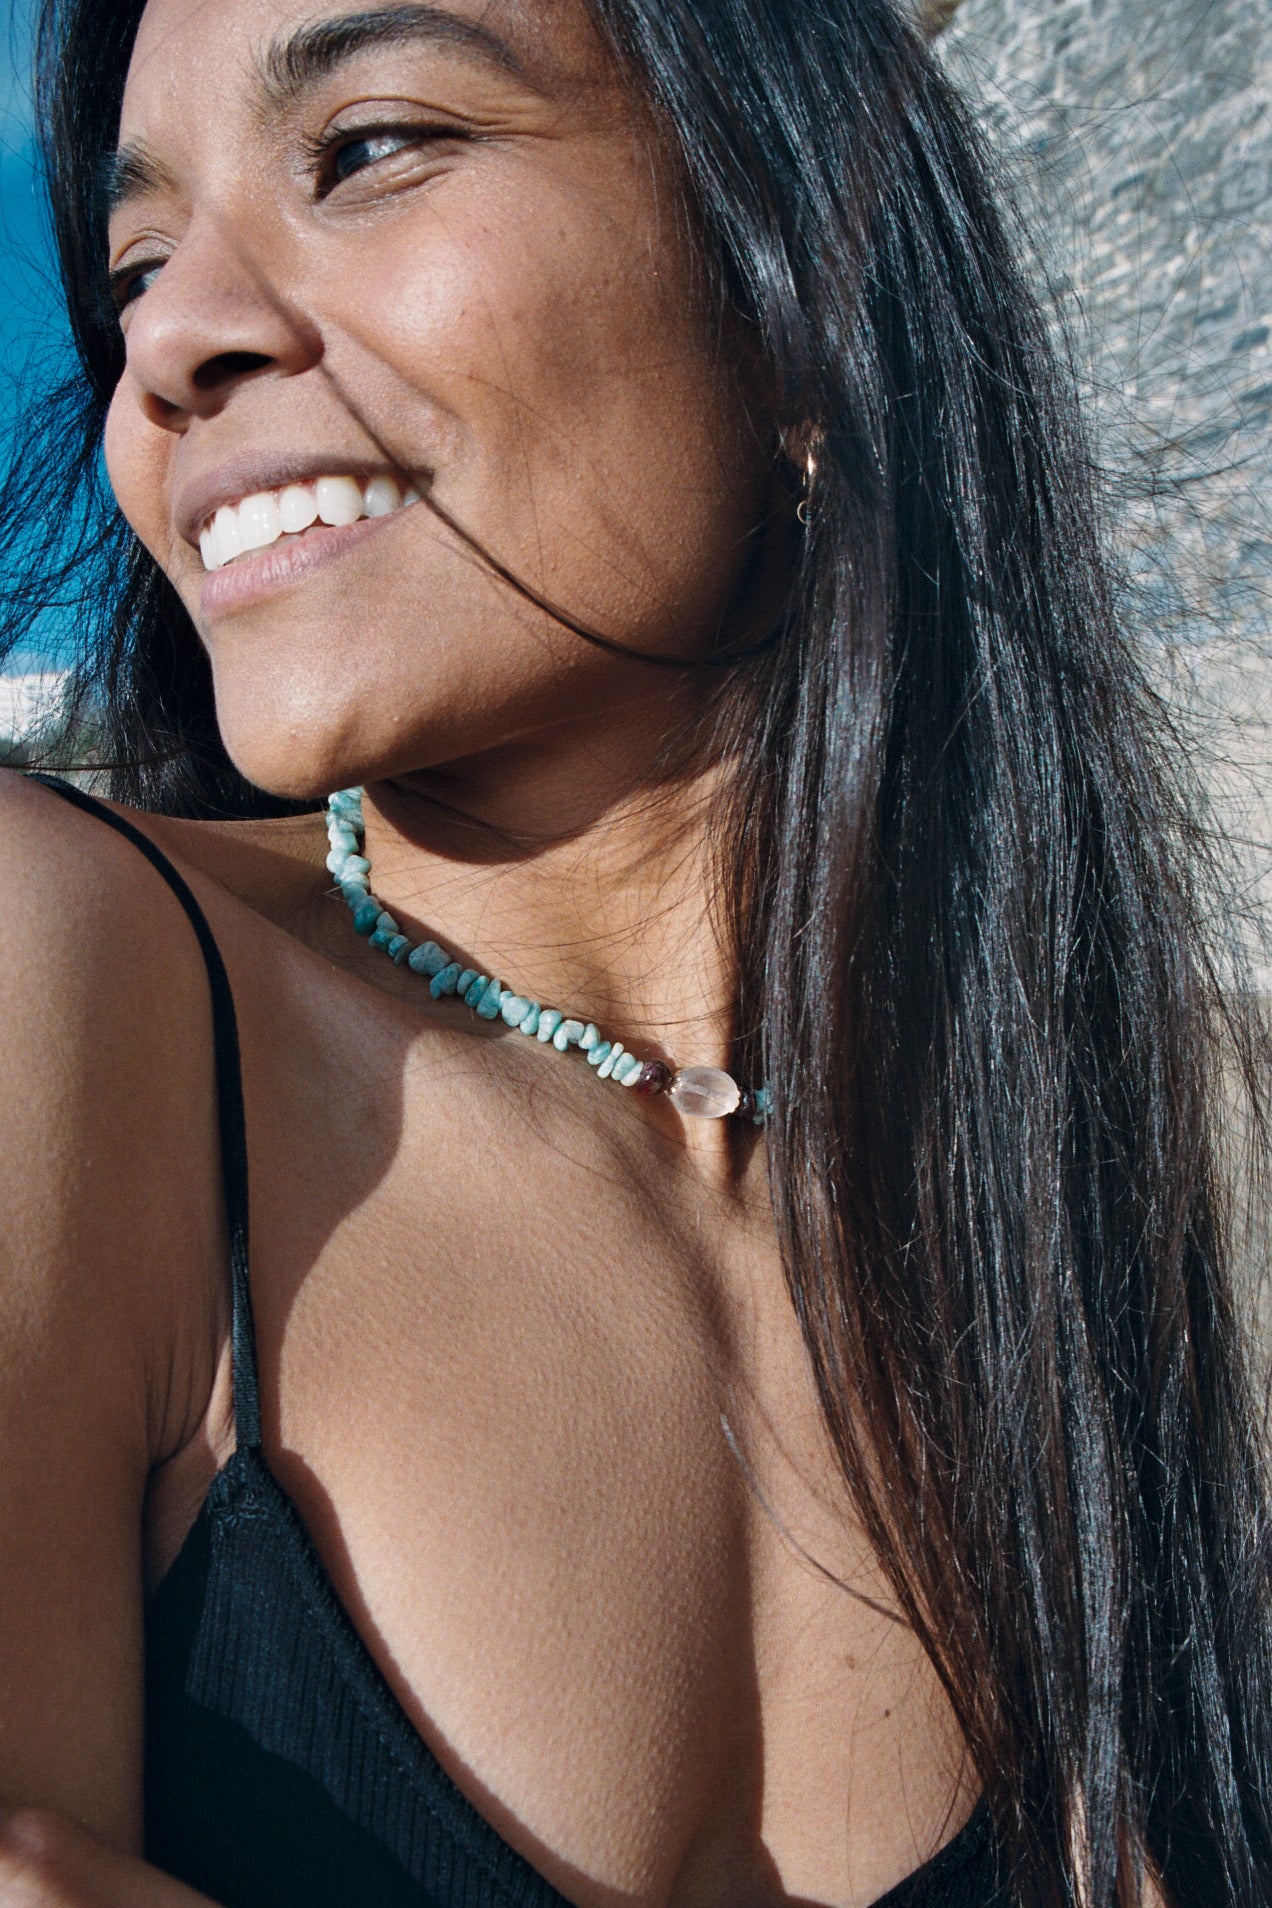 The Amazonite necklace